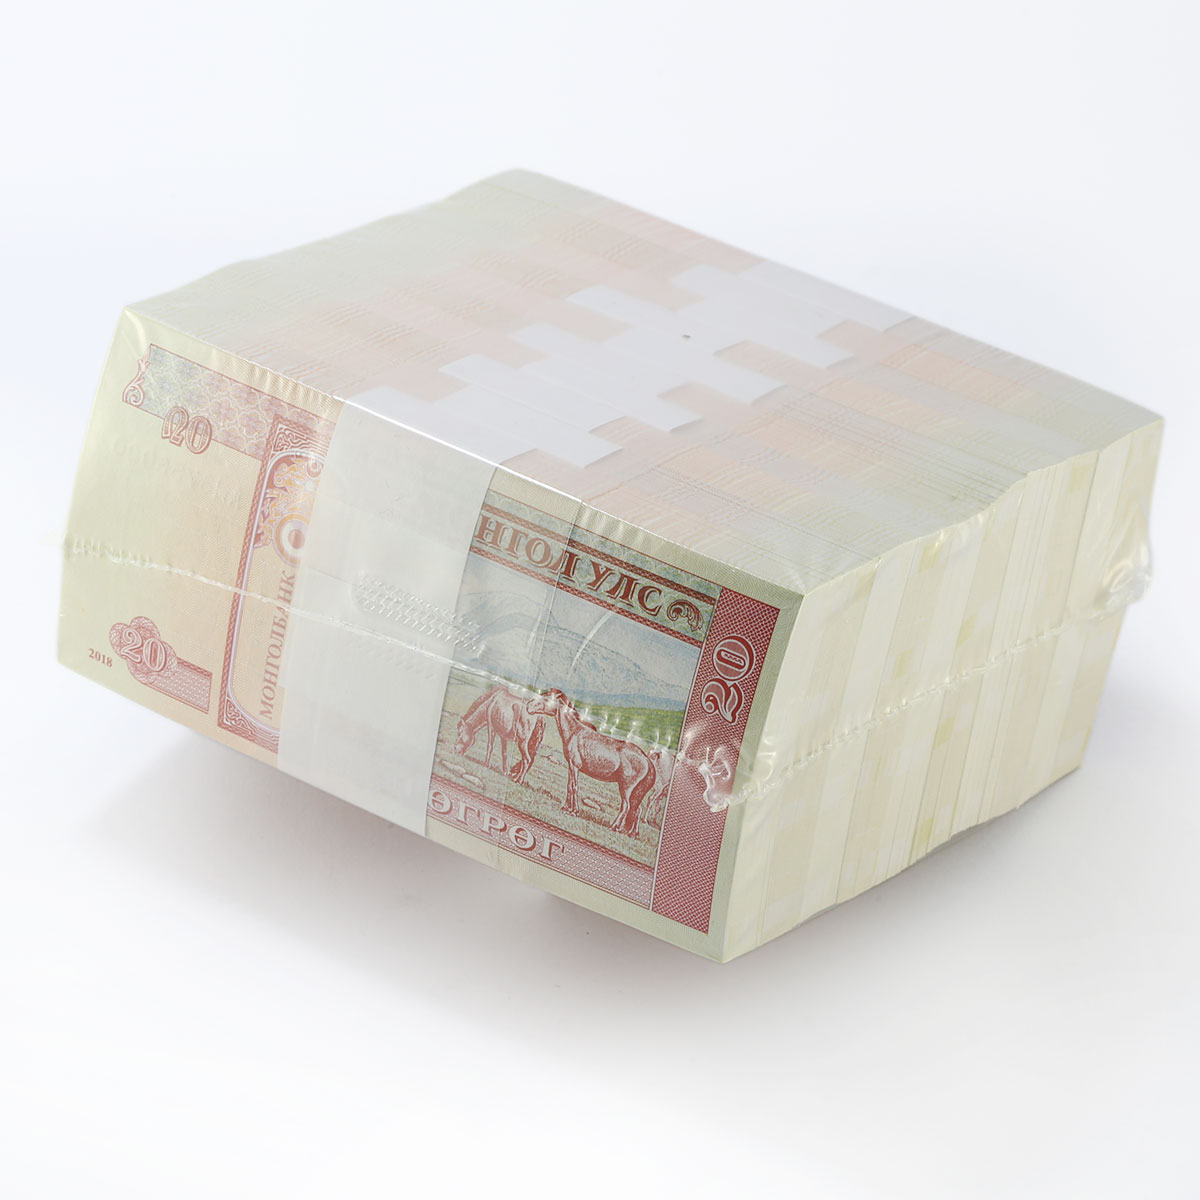 Mongolia 20 togrog 1000 banknotes brick bundle 2018